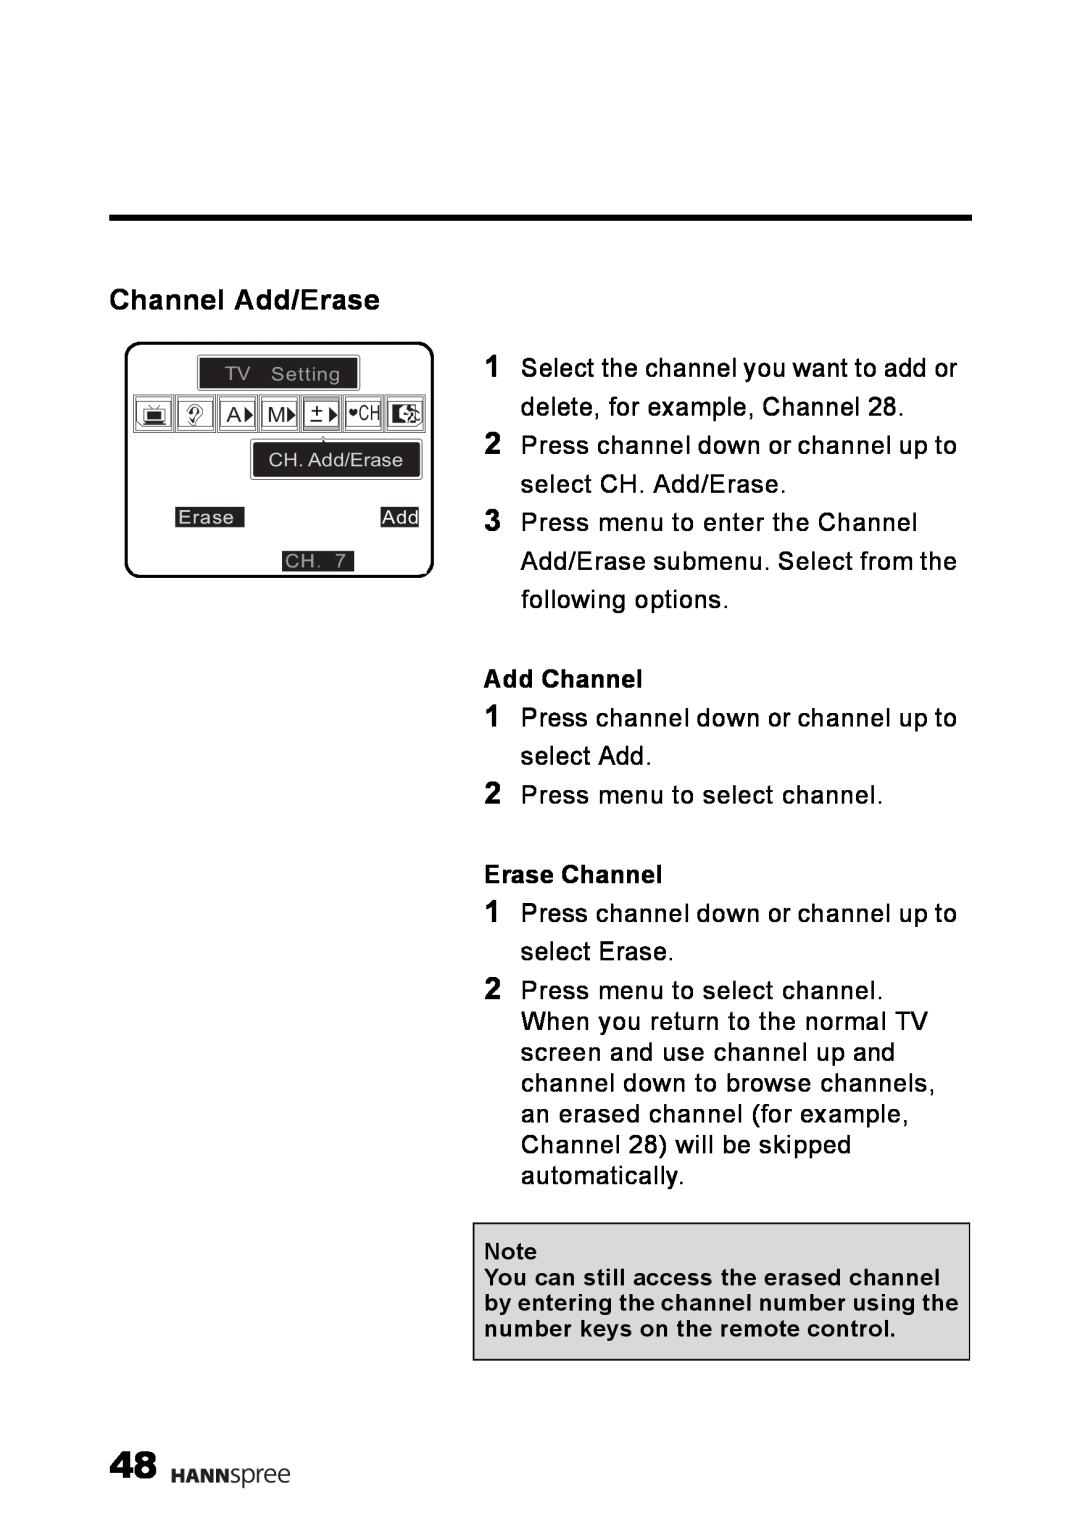 HANNspree LT09-10U1-000 user manual Channel Add/Erase, Add Channel, Erase Channel 